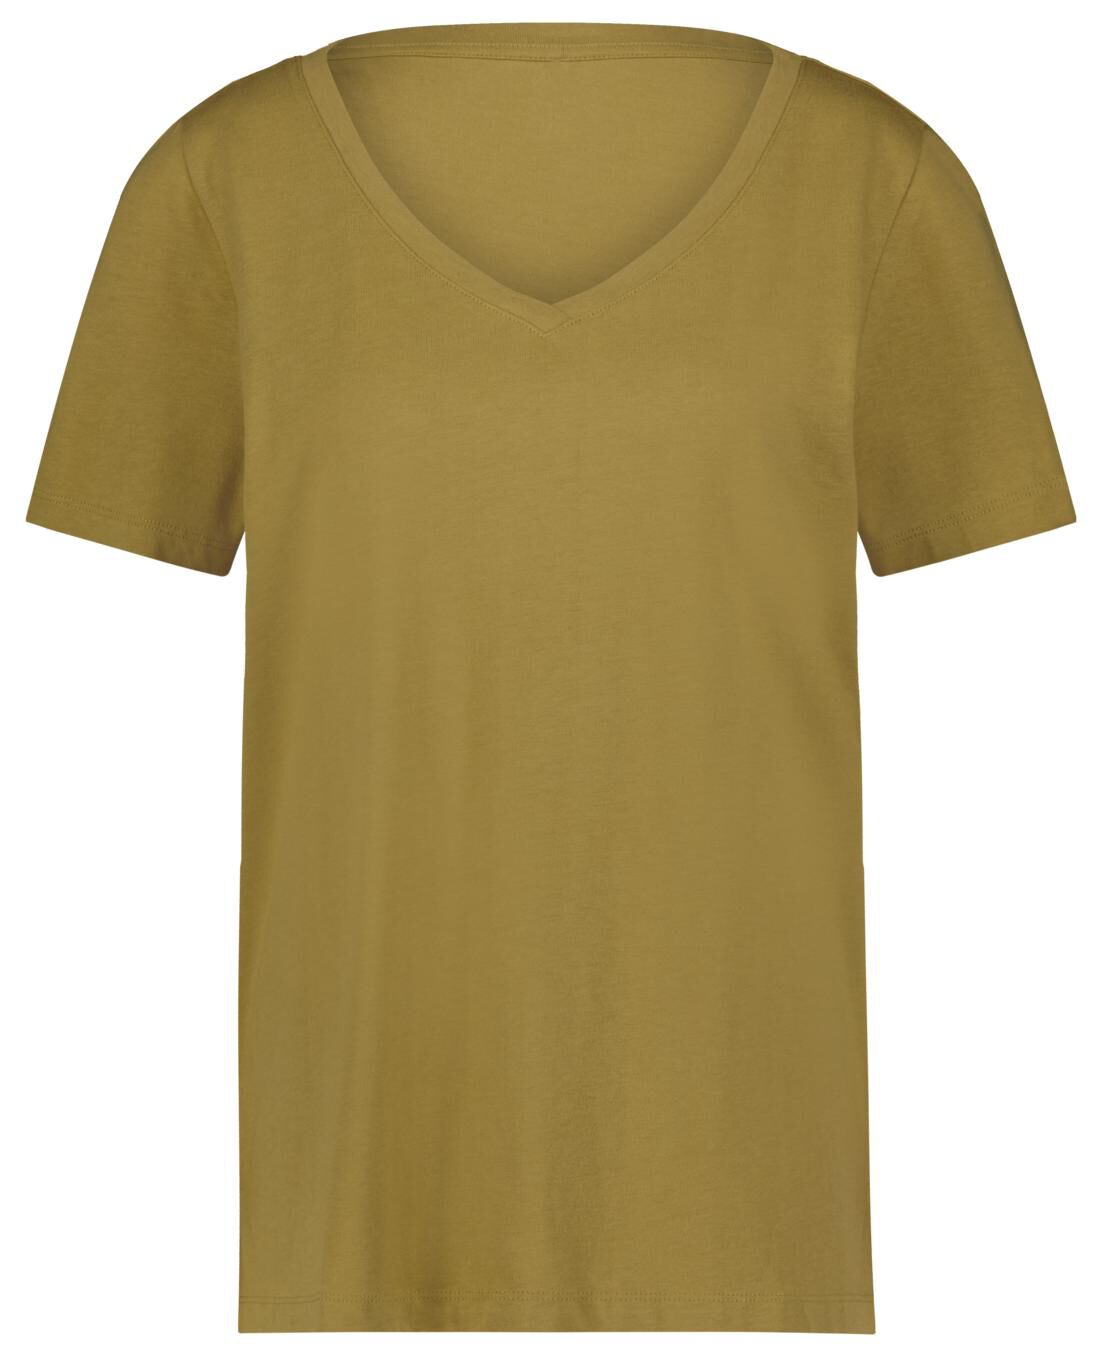 HEMA Dames T-shirt Danila Geel (geel)